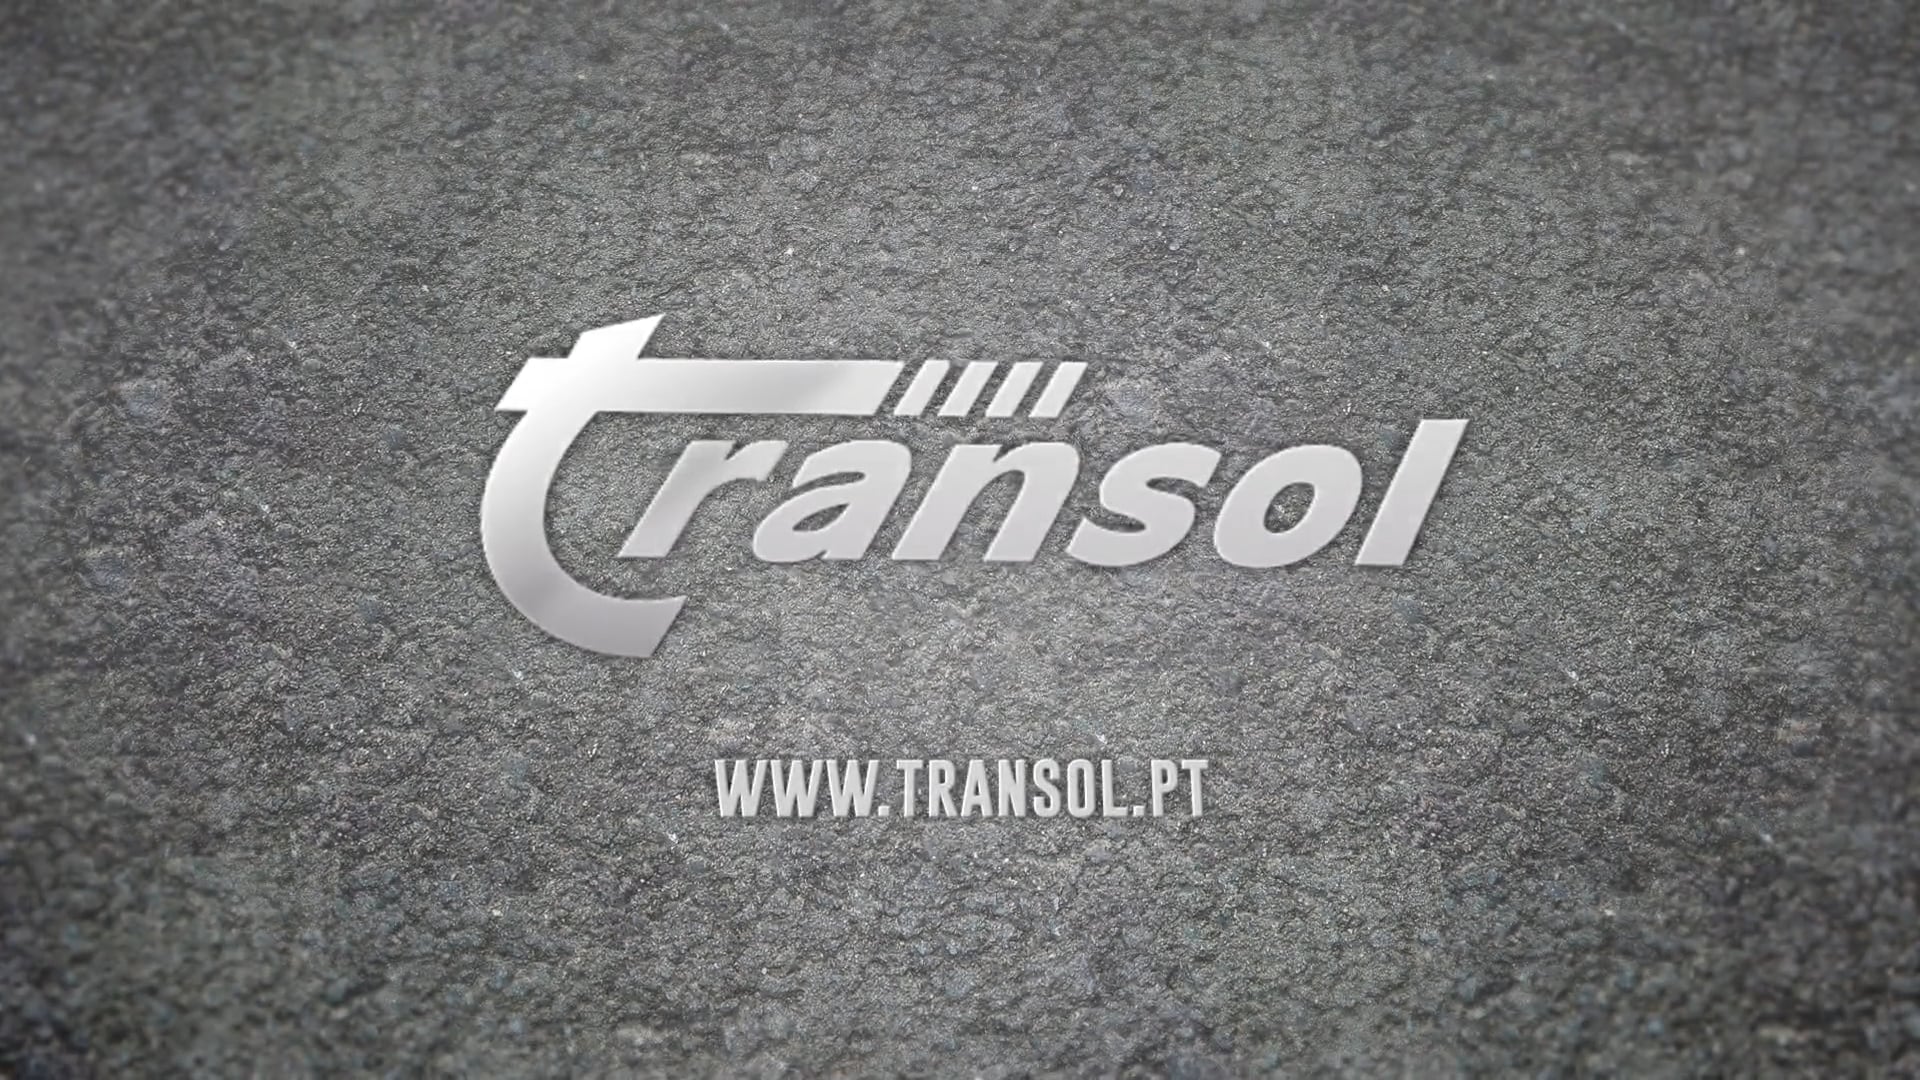 Transol - Advertising Video